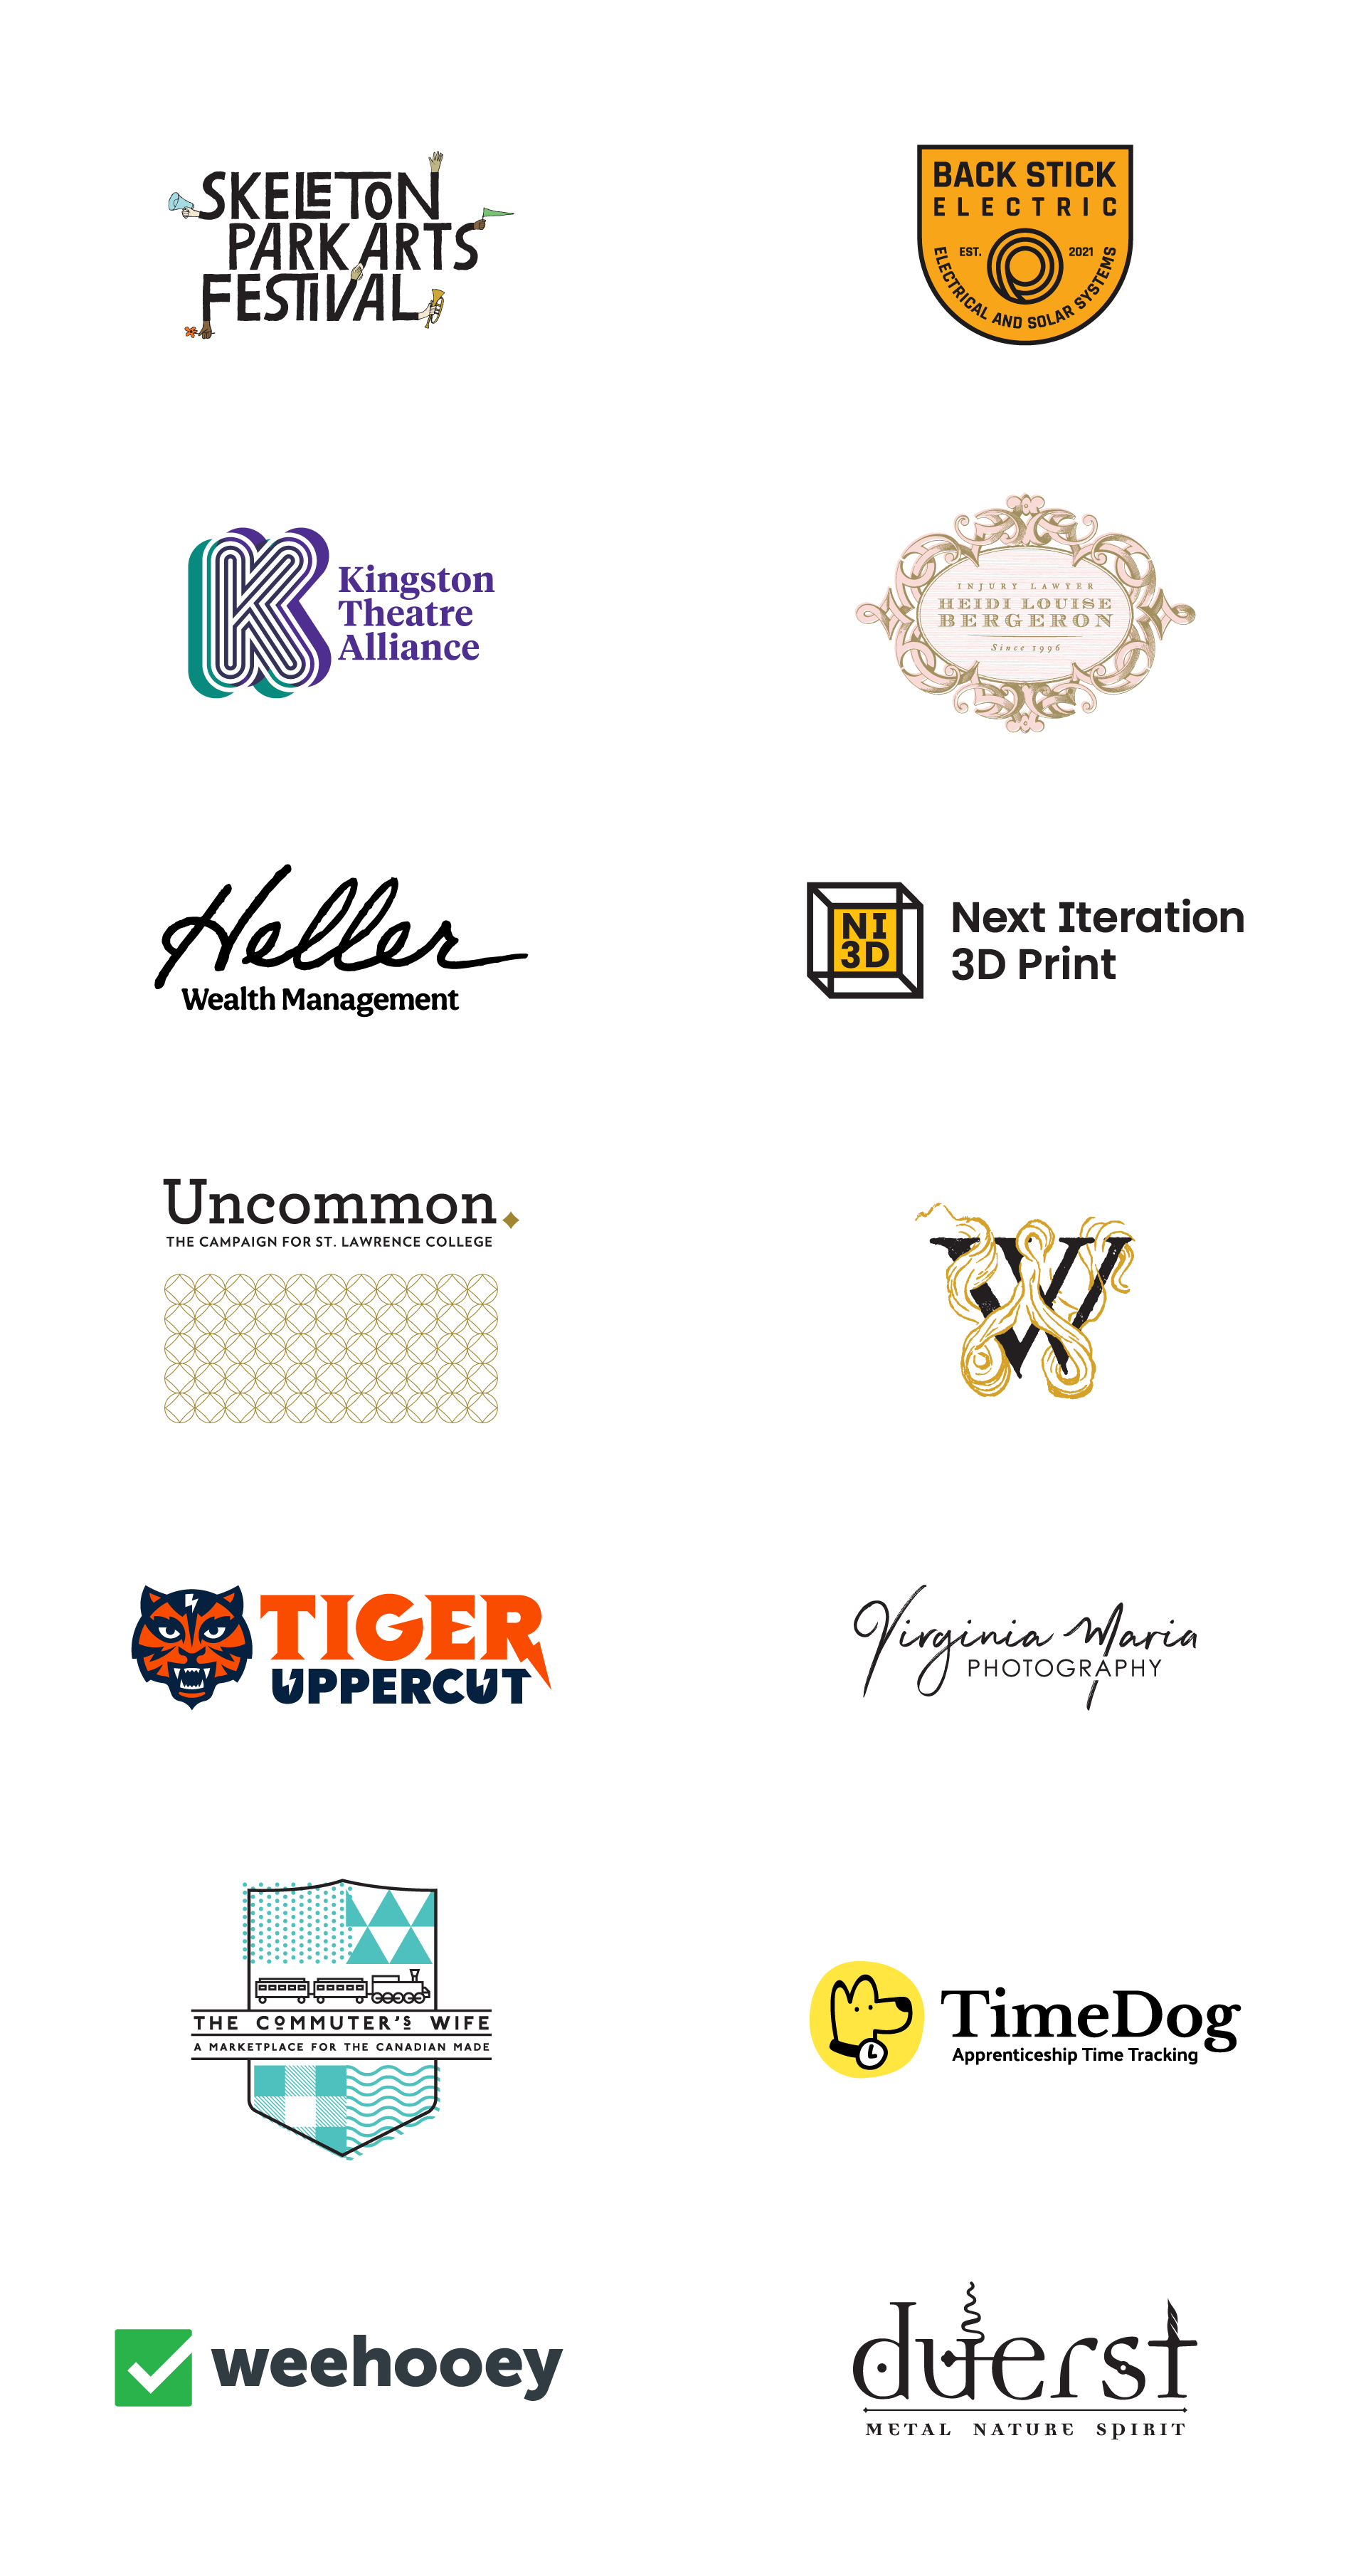 A collection of logos